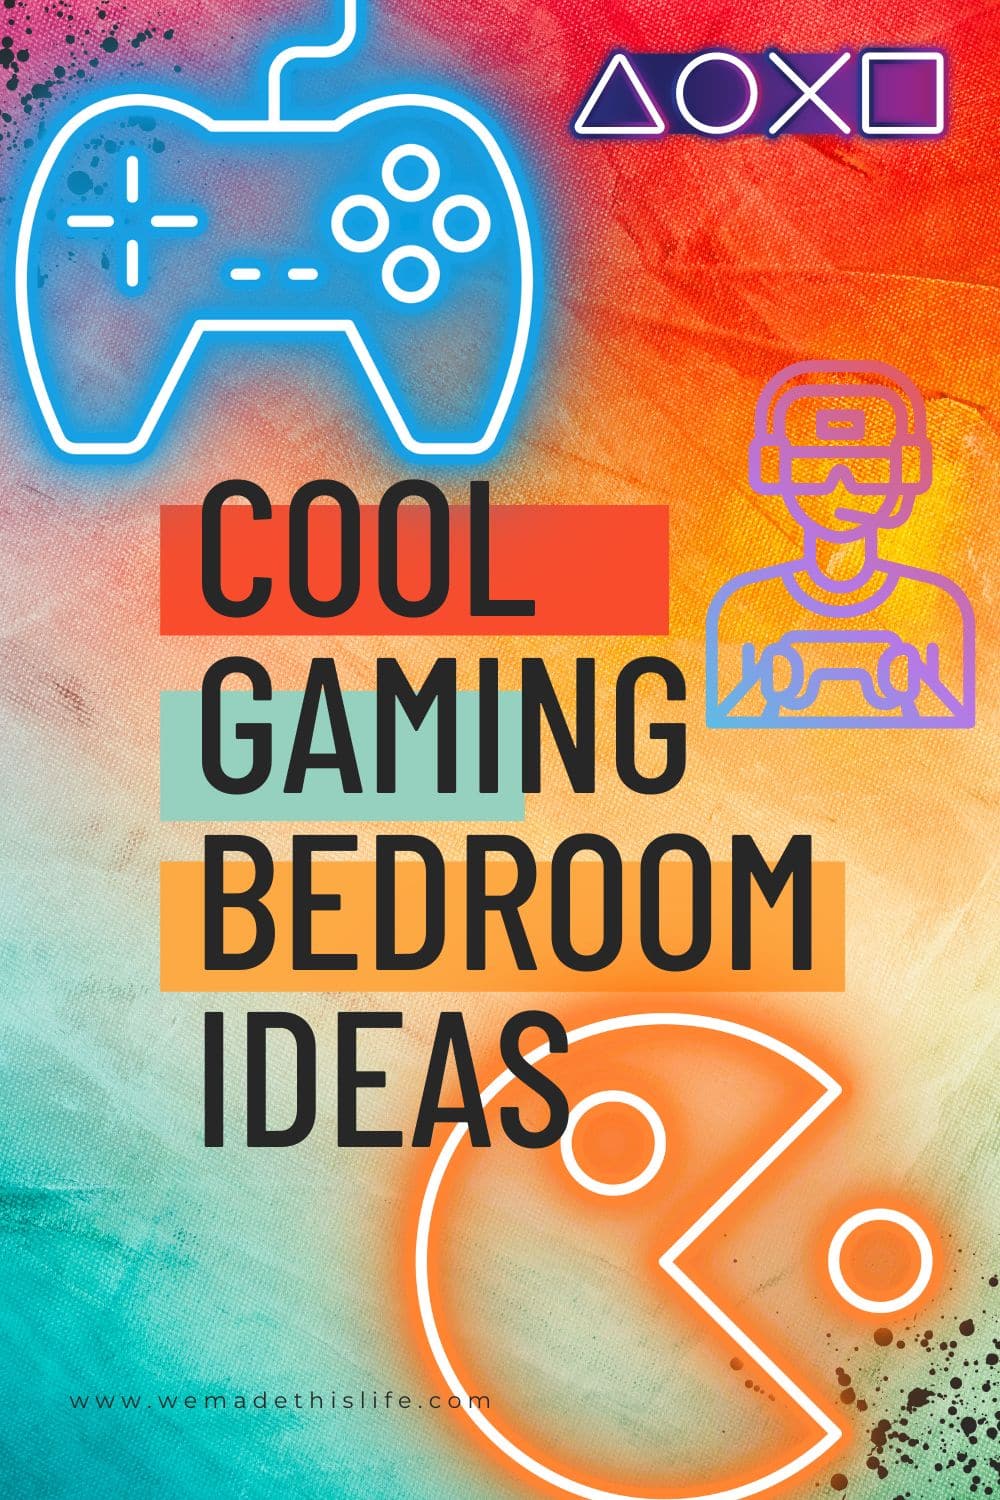 Cool gaming bedroom ideas